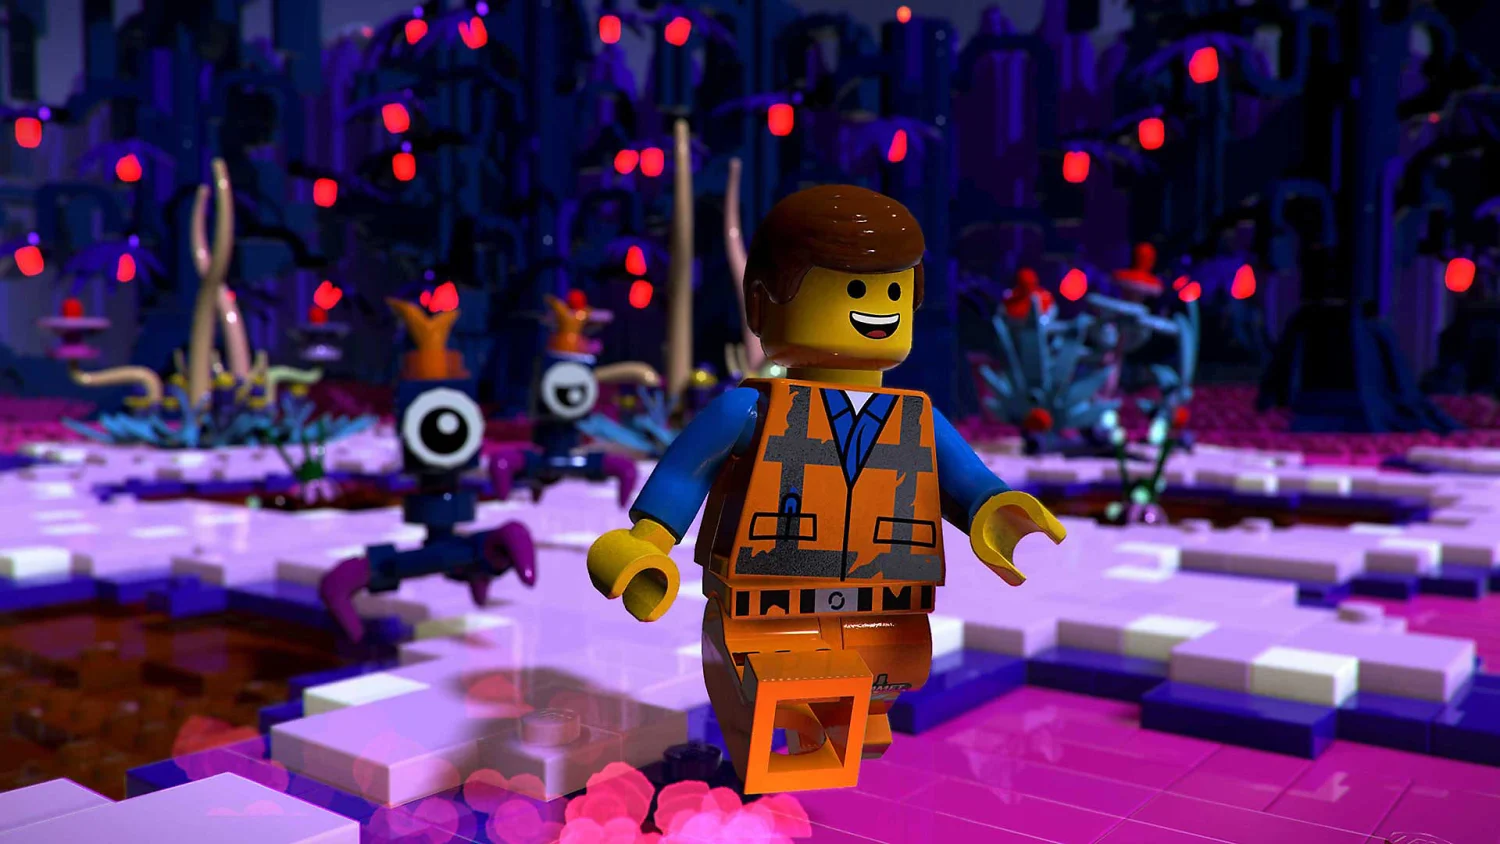 Jogo Lego The Movie Videogame PS4